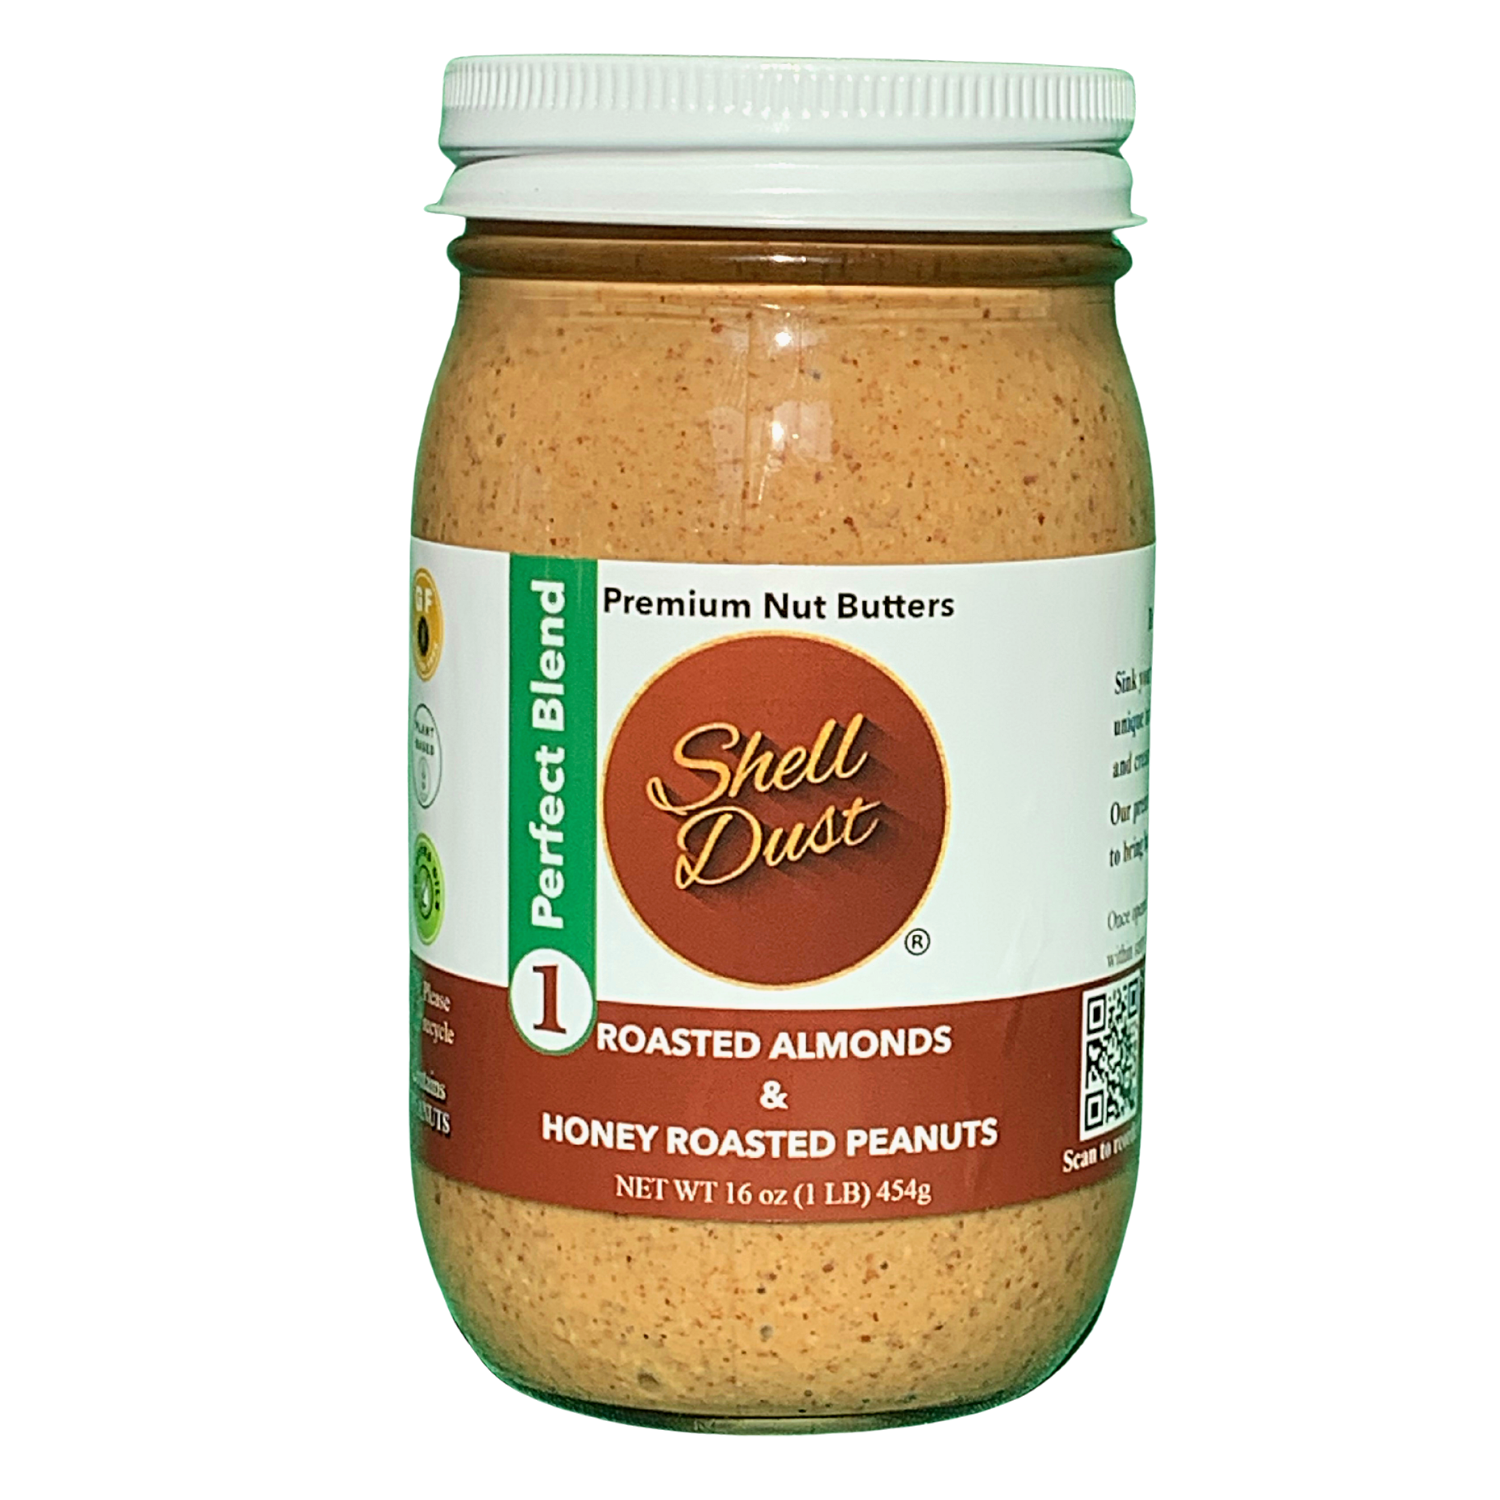 Healthy Nut Butters – Shell Dust